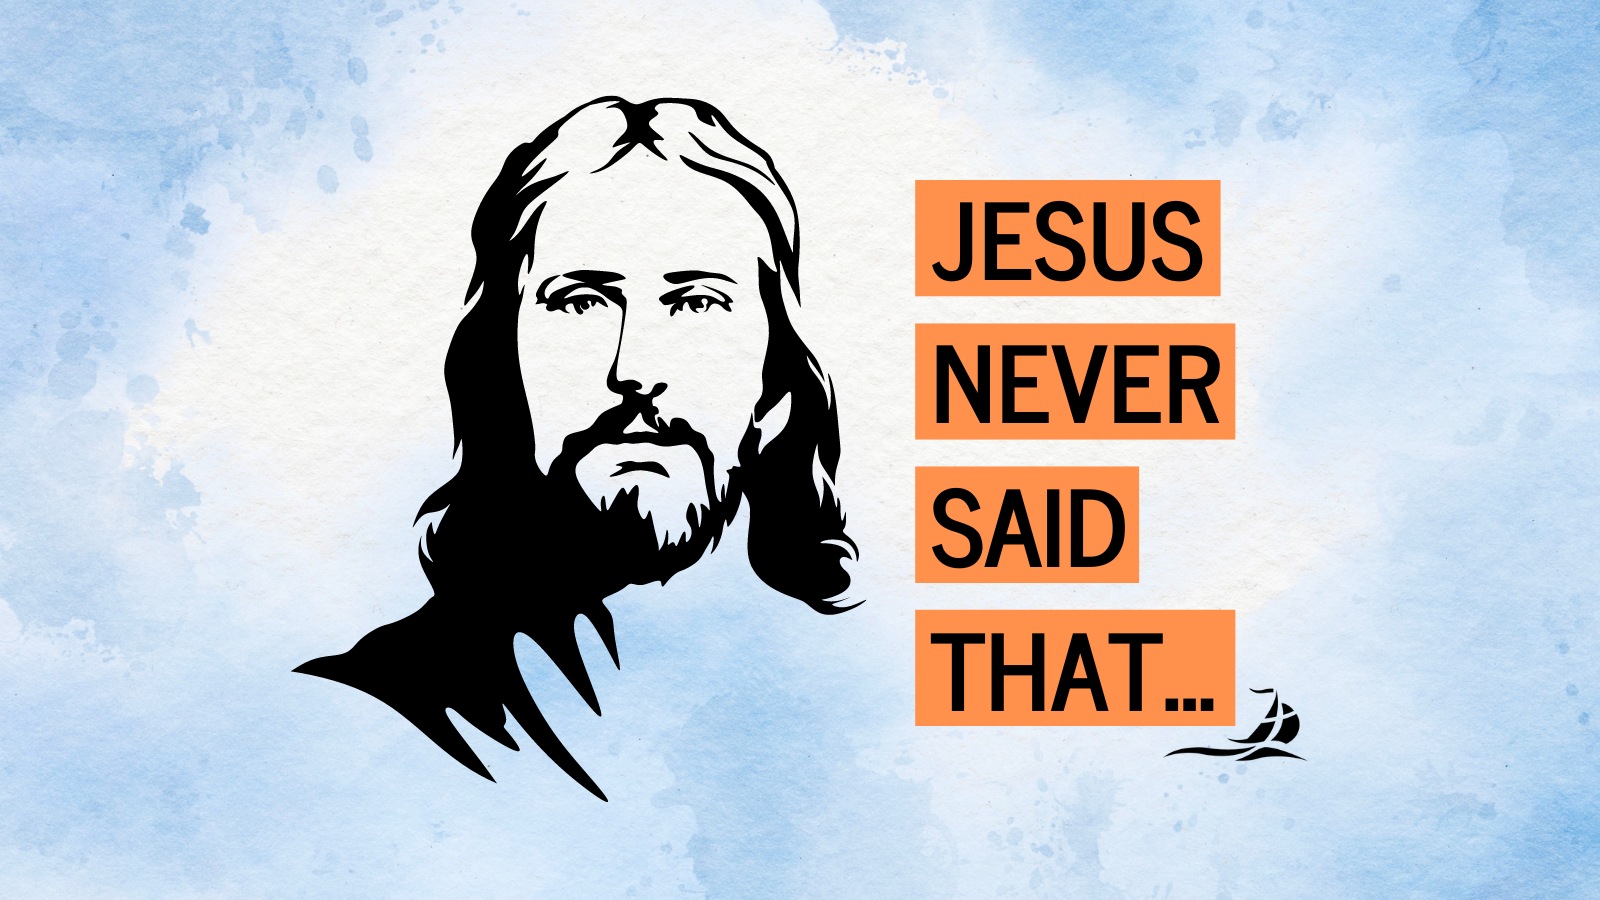 Jesus Never Said That...